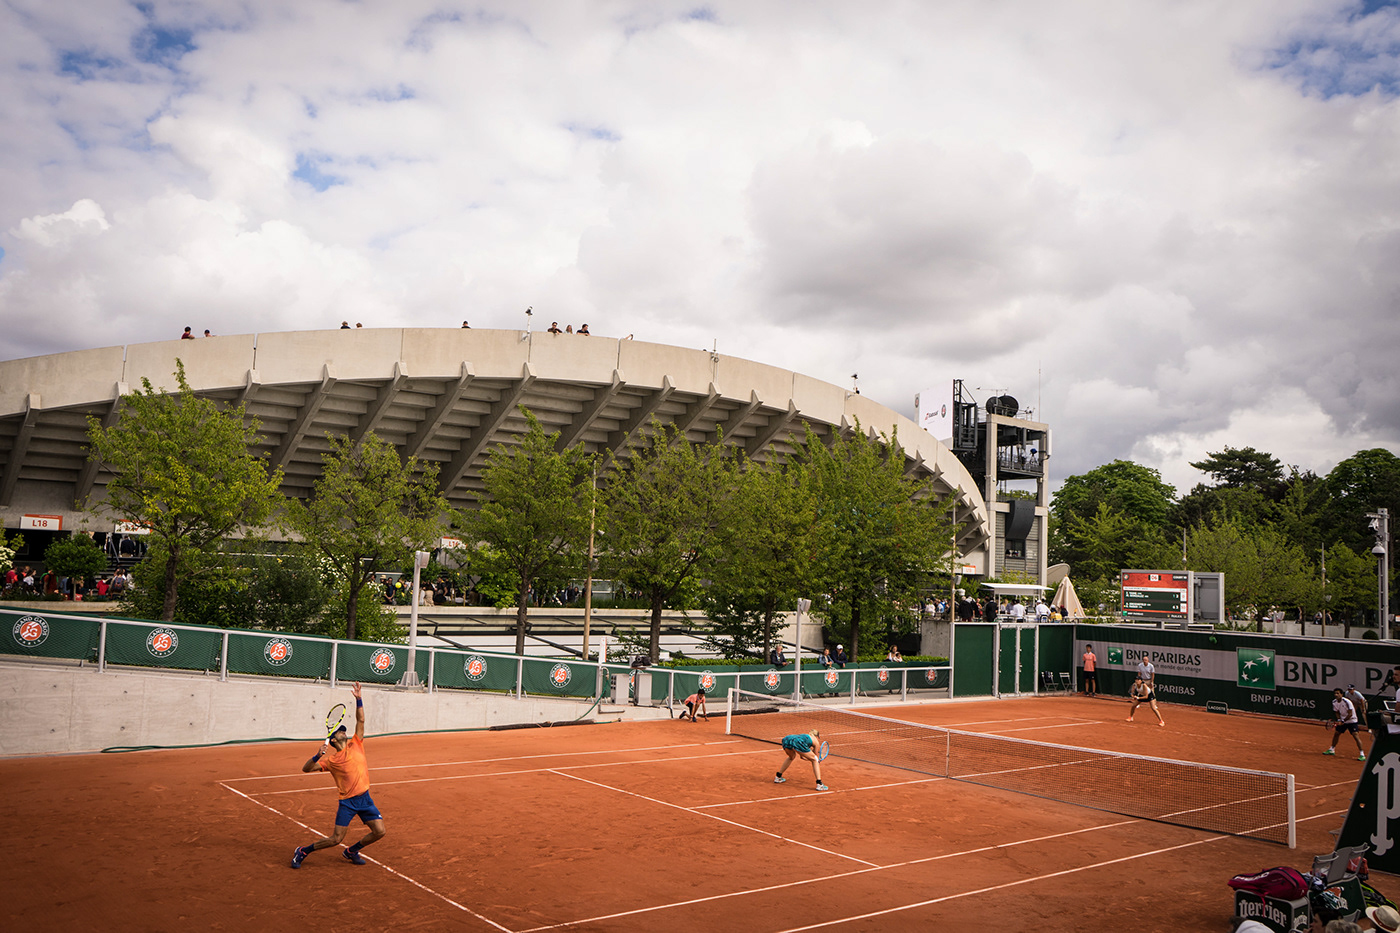 tennis RolandGarros grandslam action sport Paris